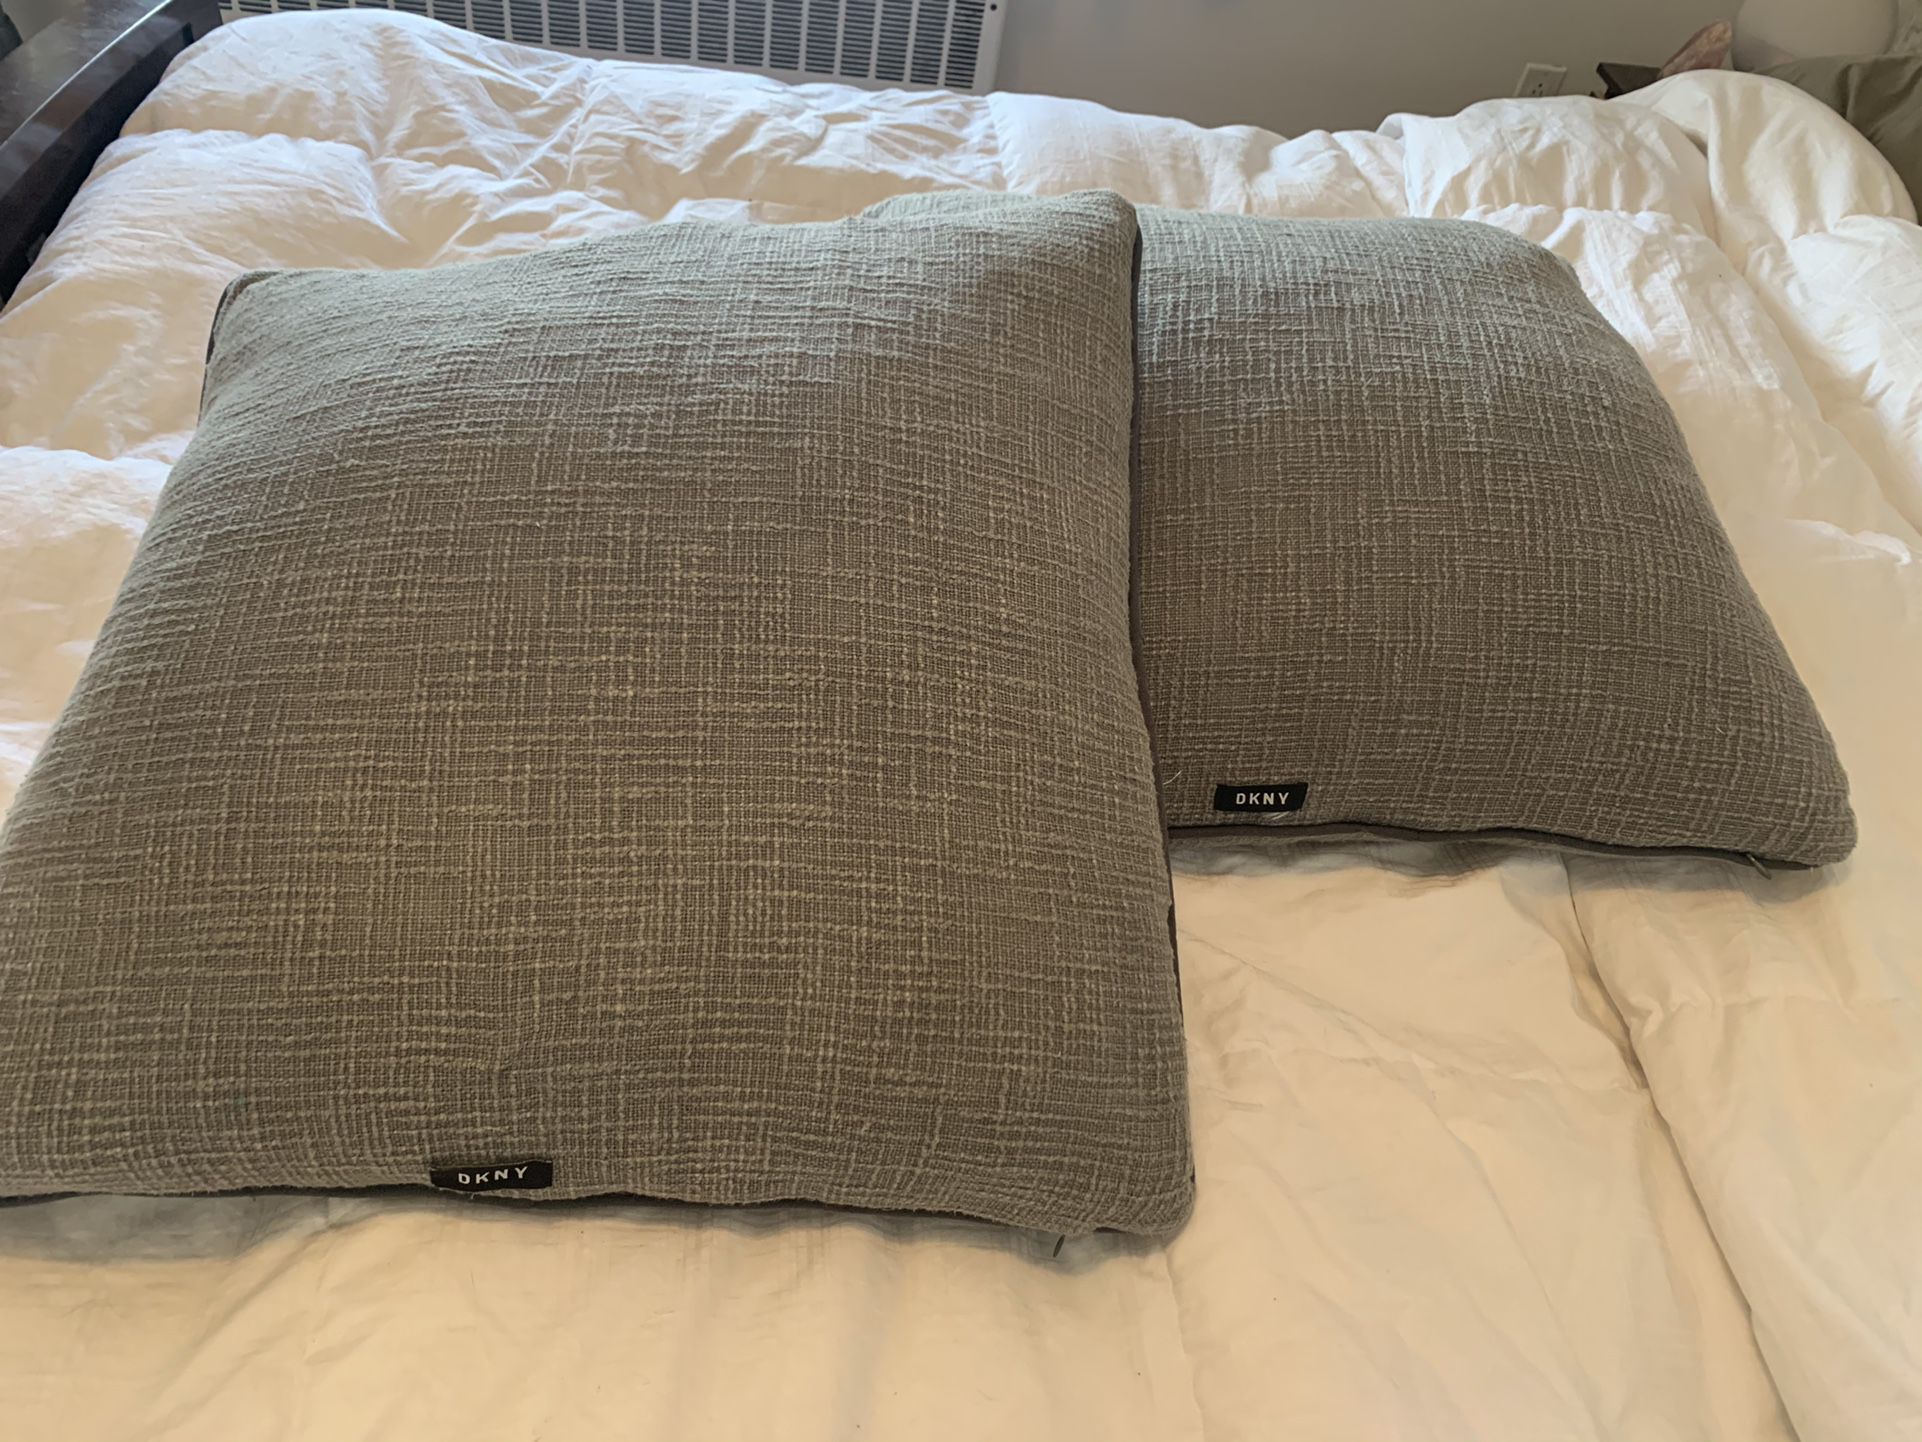 FREE DKNY cushions/pillows